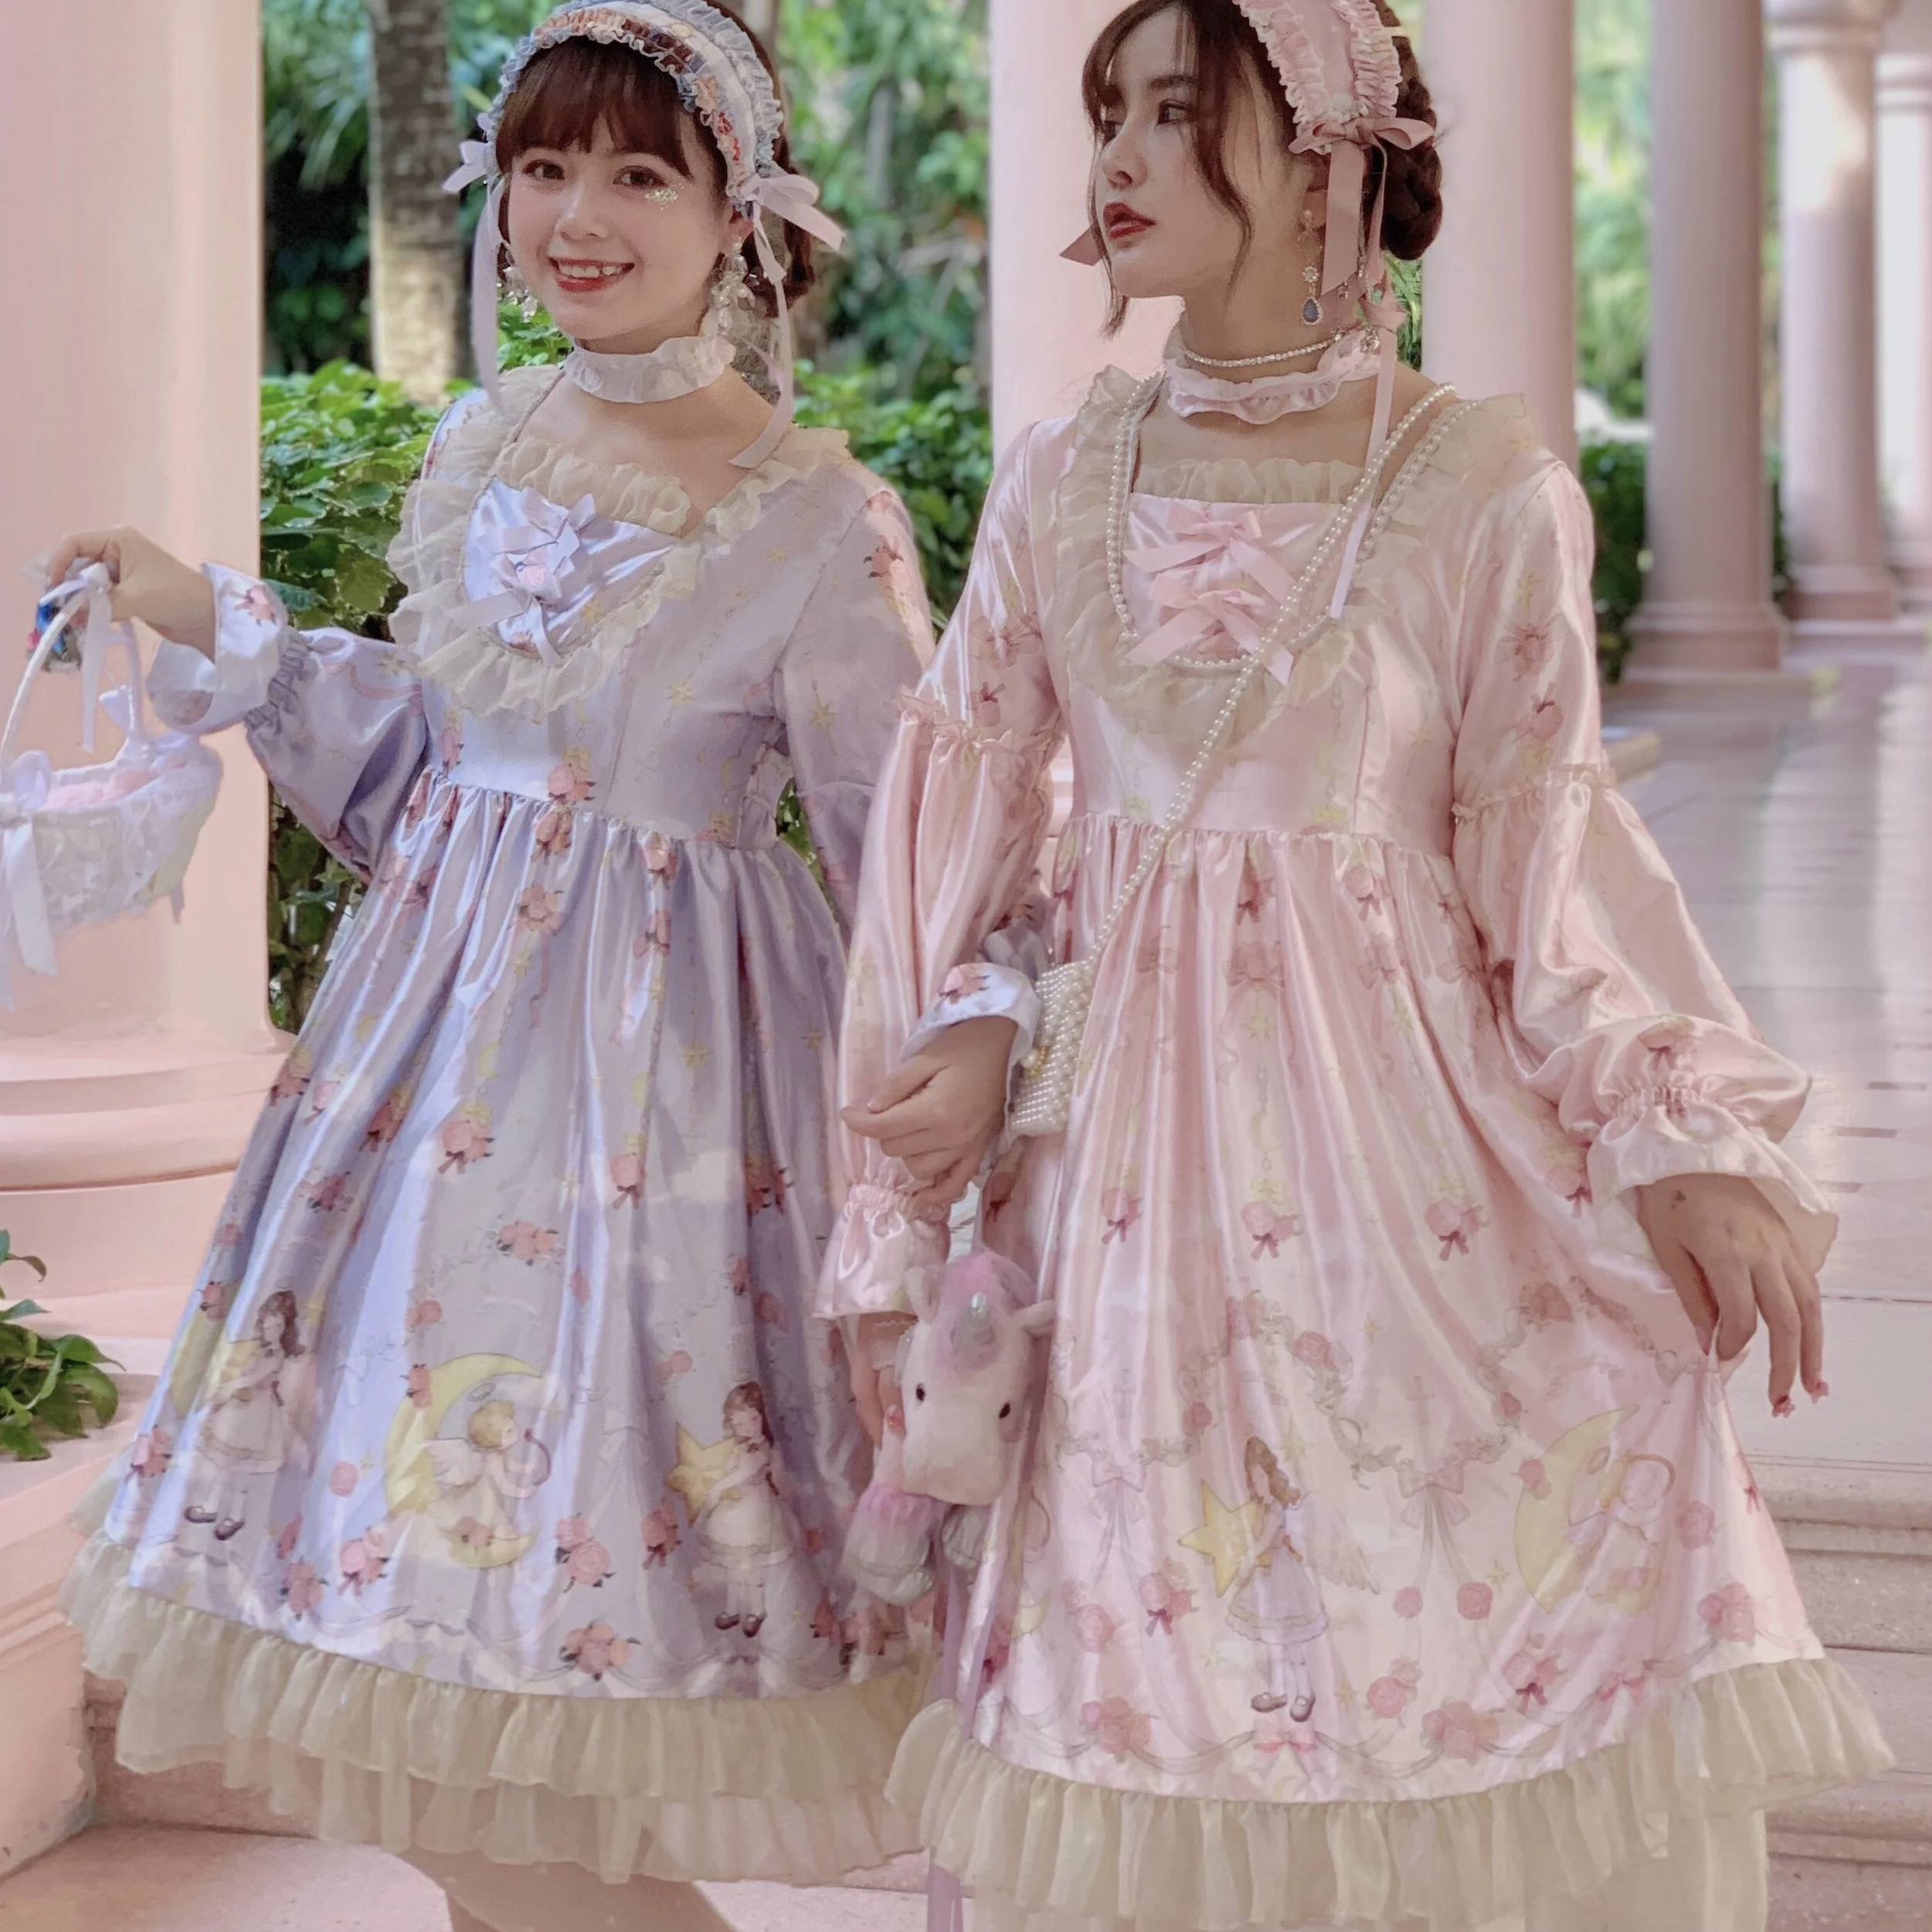 

Princess tea party sweet lolita dress soft girl retro lace bowknot cute printing victorian dress kawaii girl gothic lolita op